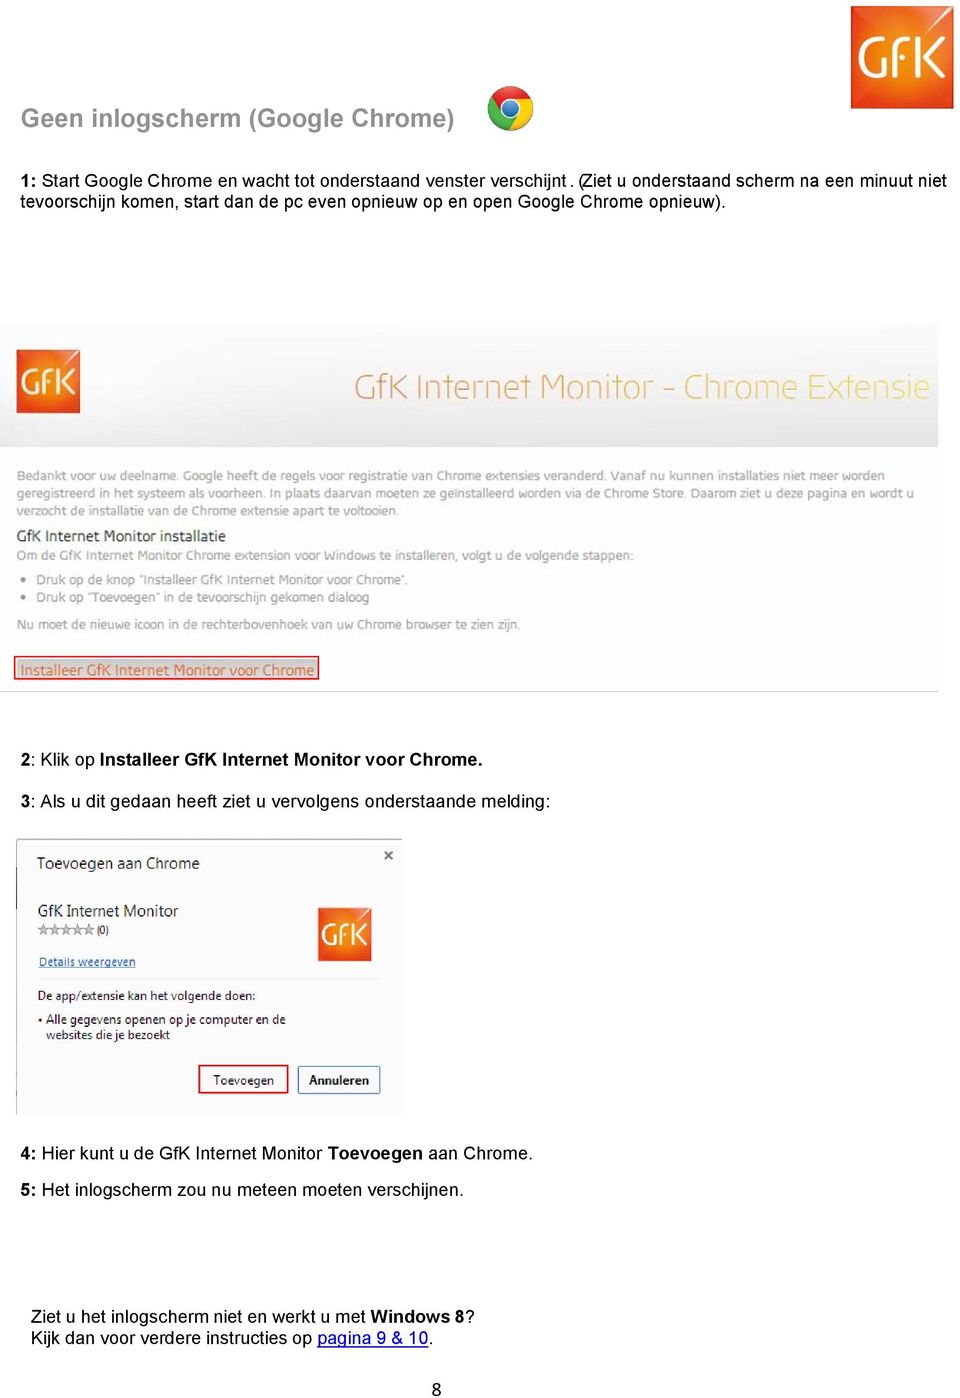 2: Klik op Installeer GfK Internet Monitor voor Chrome.